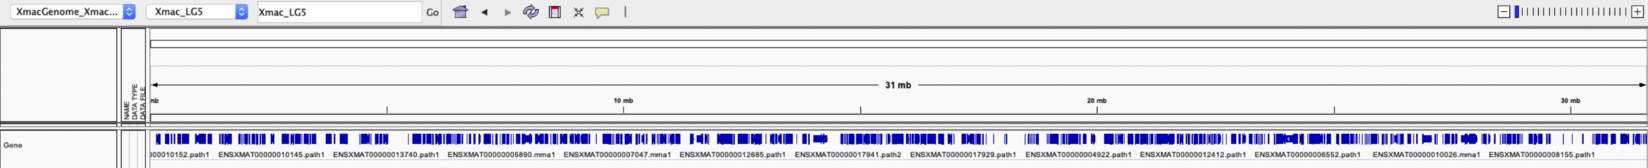 Snapshot of IGV Genome Browser